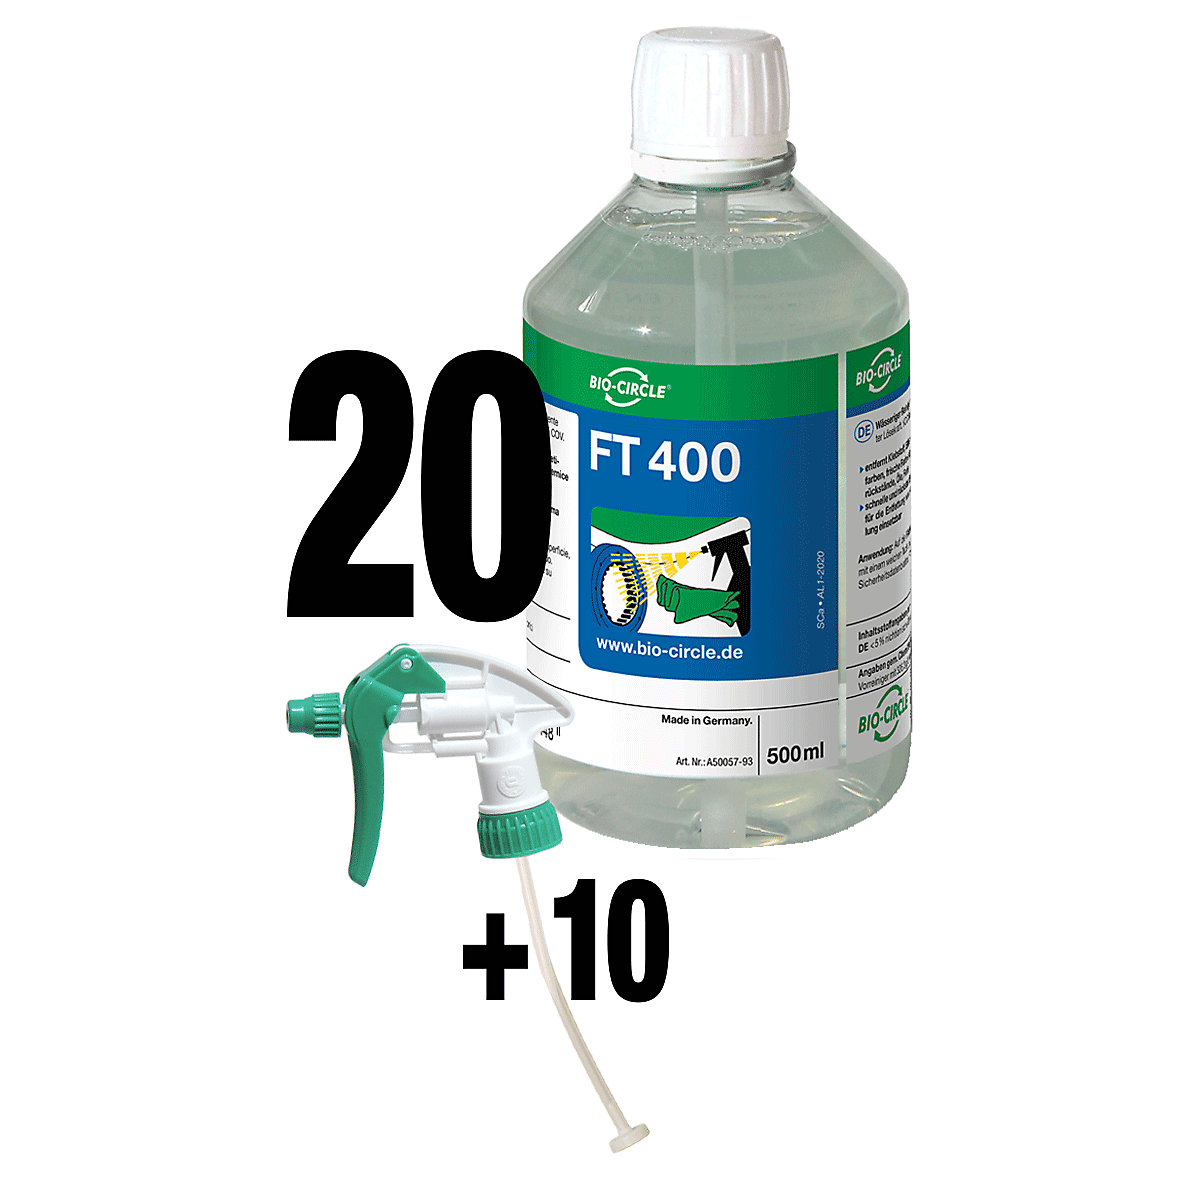 Detergente FT 400 – Bio-Circle